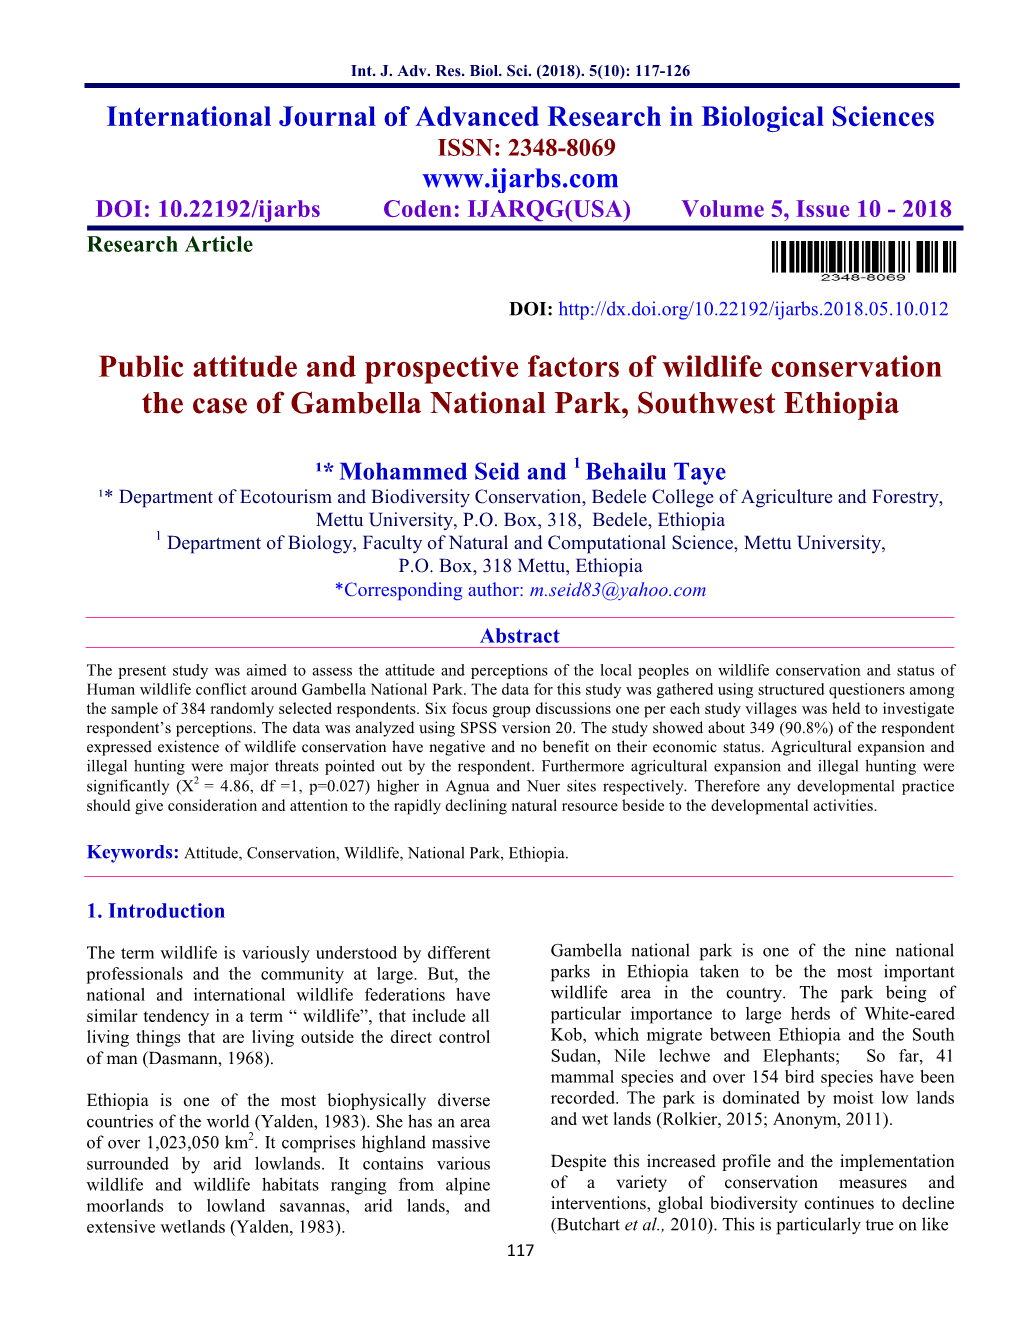 Public Attitude and Prospective Factors of Wildlife Conservation the Case of Gambella National Park, Southwest Ethiopia